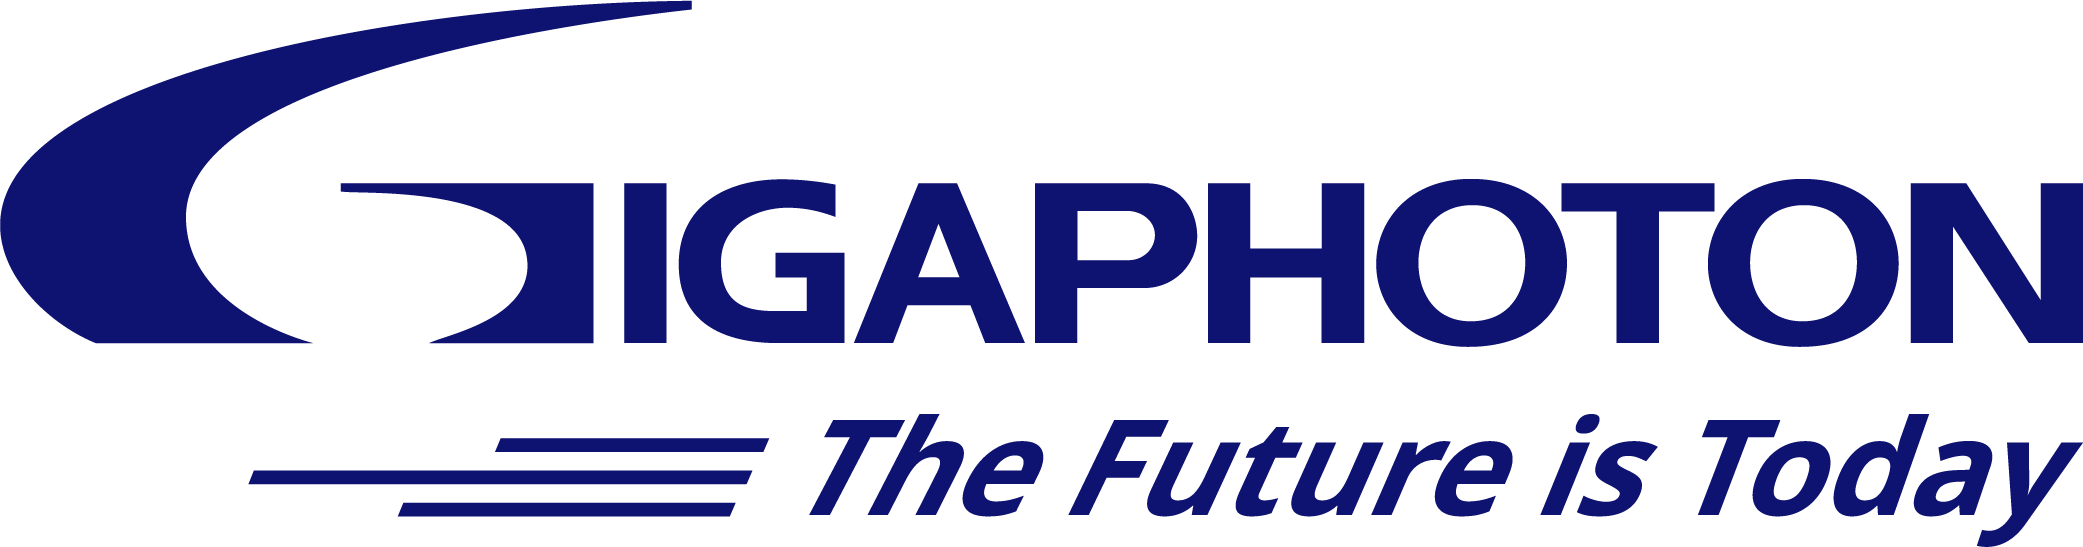 GIGAPHOTON Logo